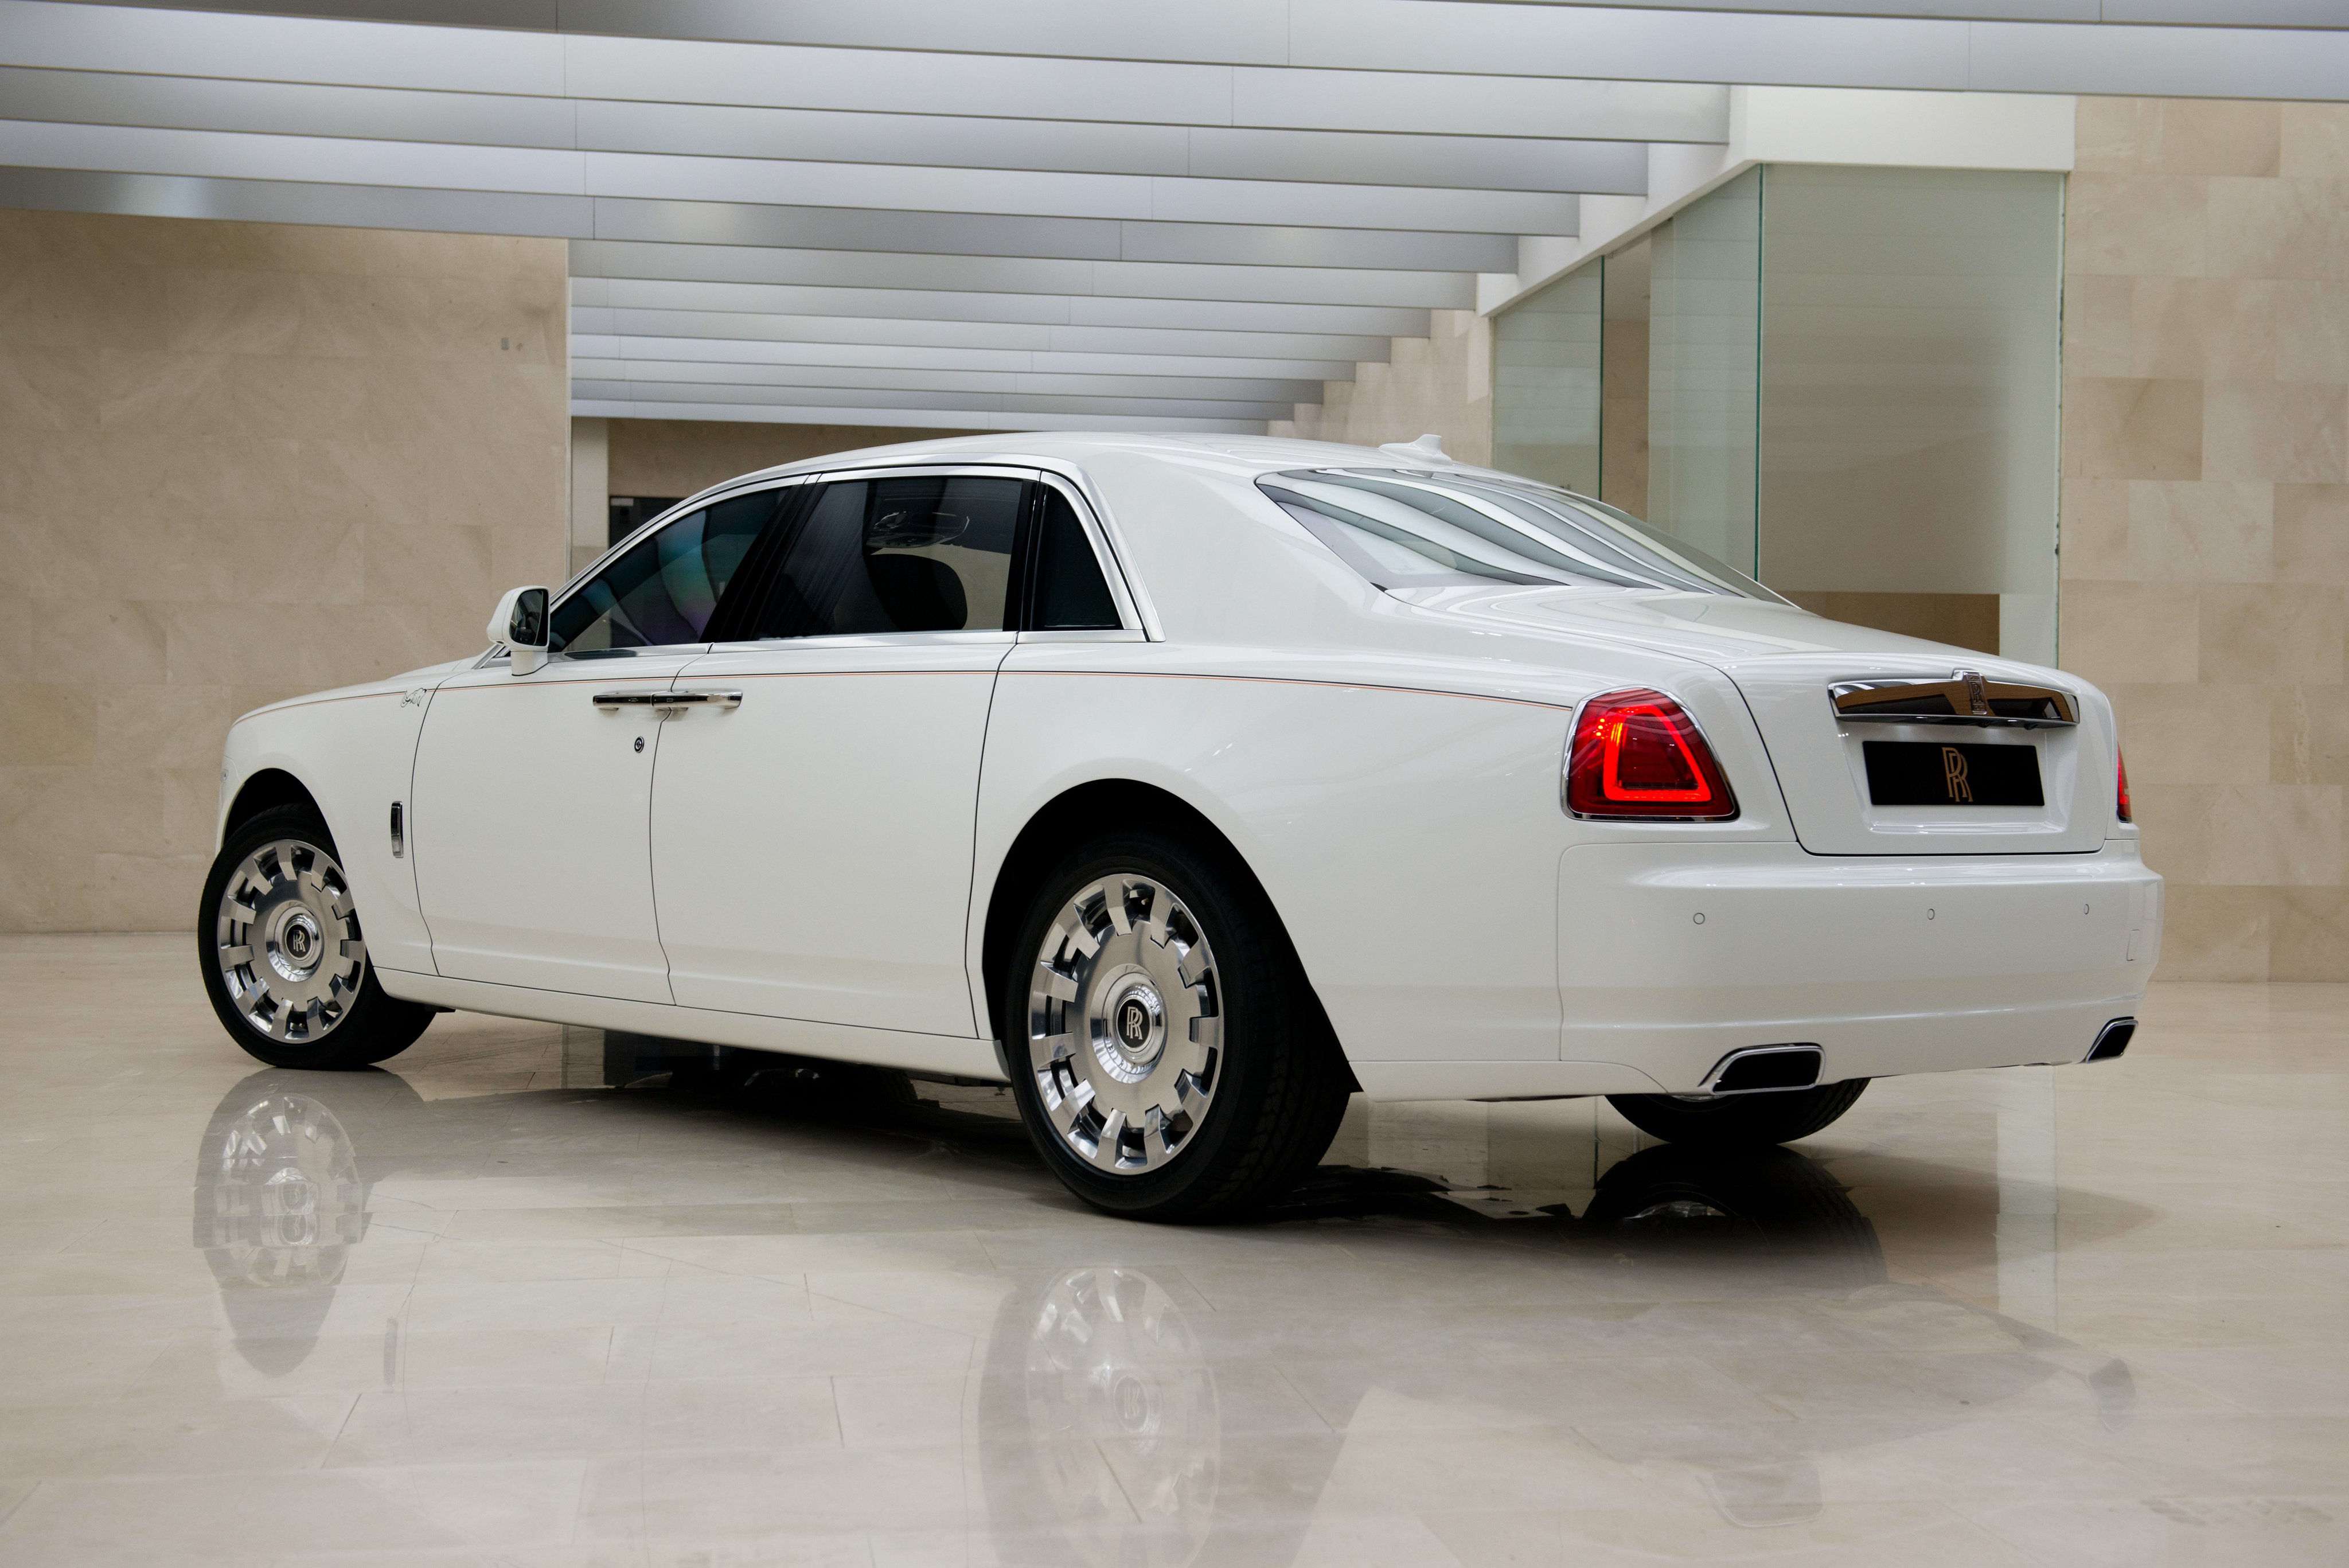 Rolls Royce Phantom Ewb Rear Wallpapers